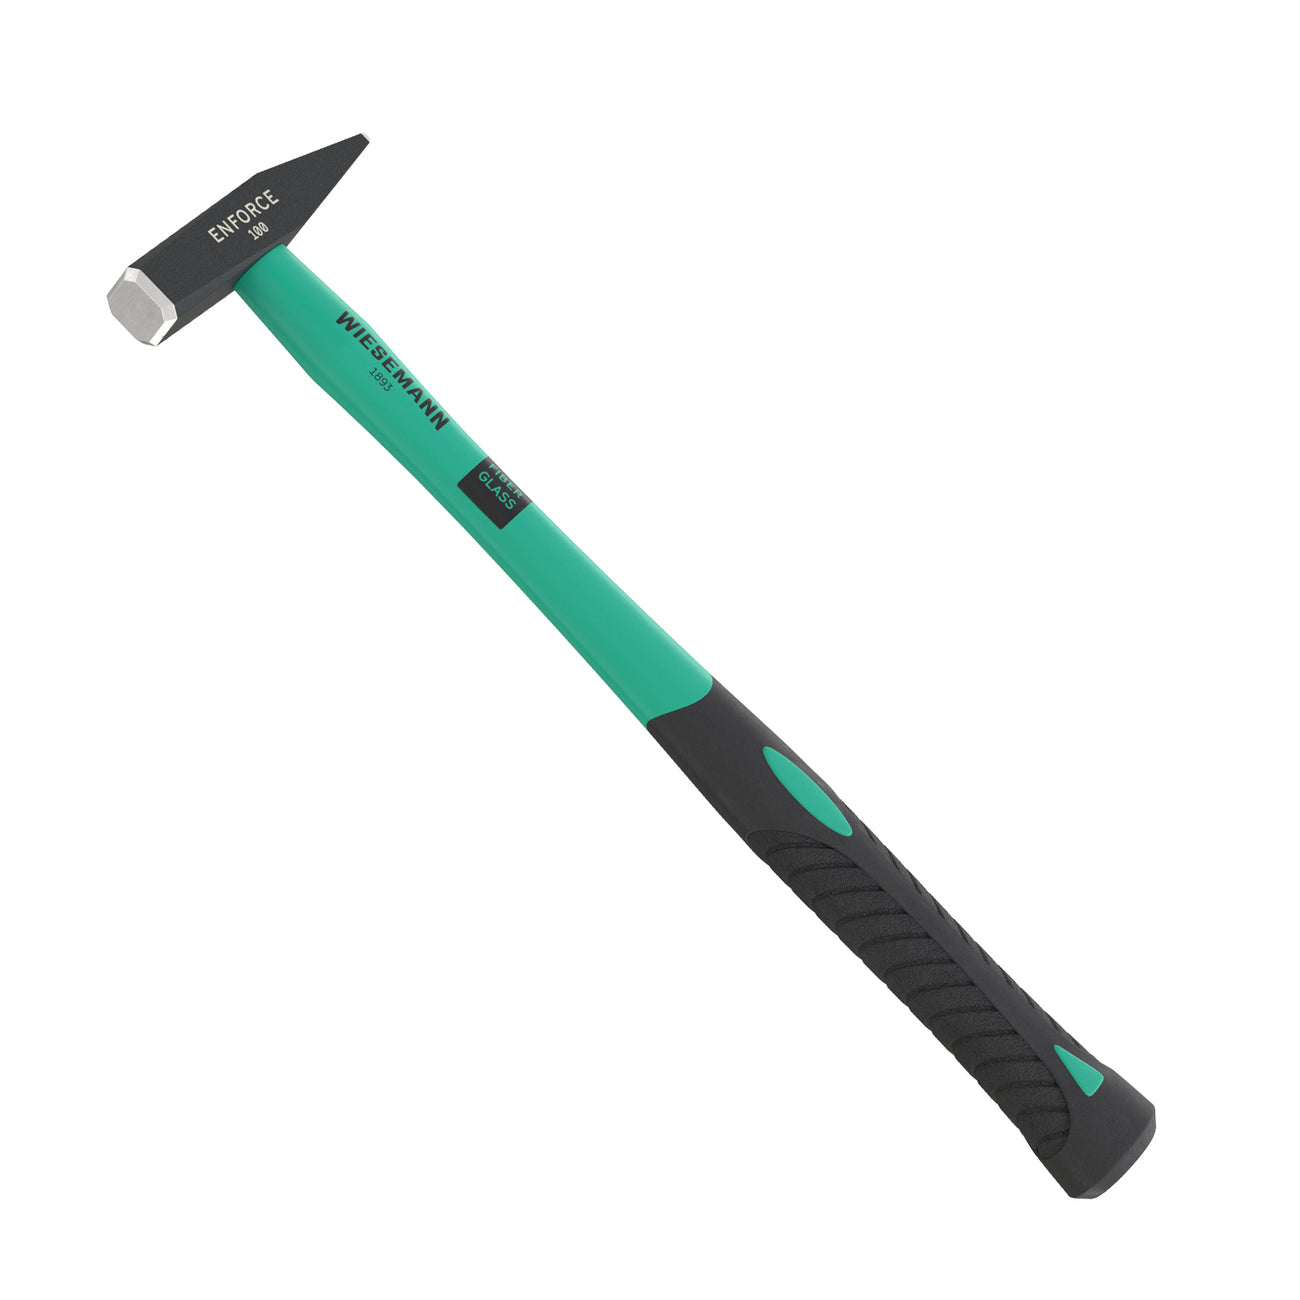 PROMAT Hickory Schlosserhammer 100 g geschmiedet Nylonschutzhülse  Stielschutz   Der Onlineshop für Werkzeuge,  Industriebedarf, Verbrauchsmaterial